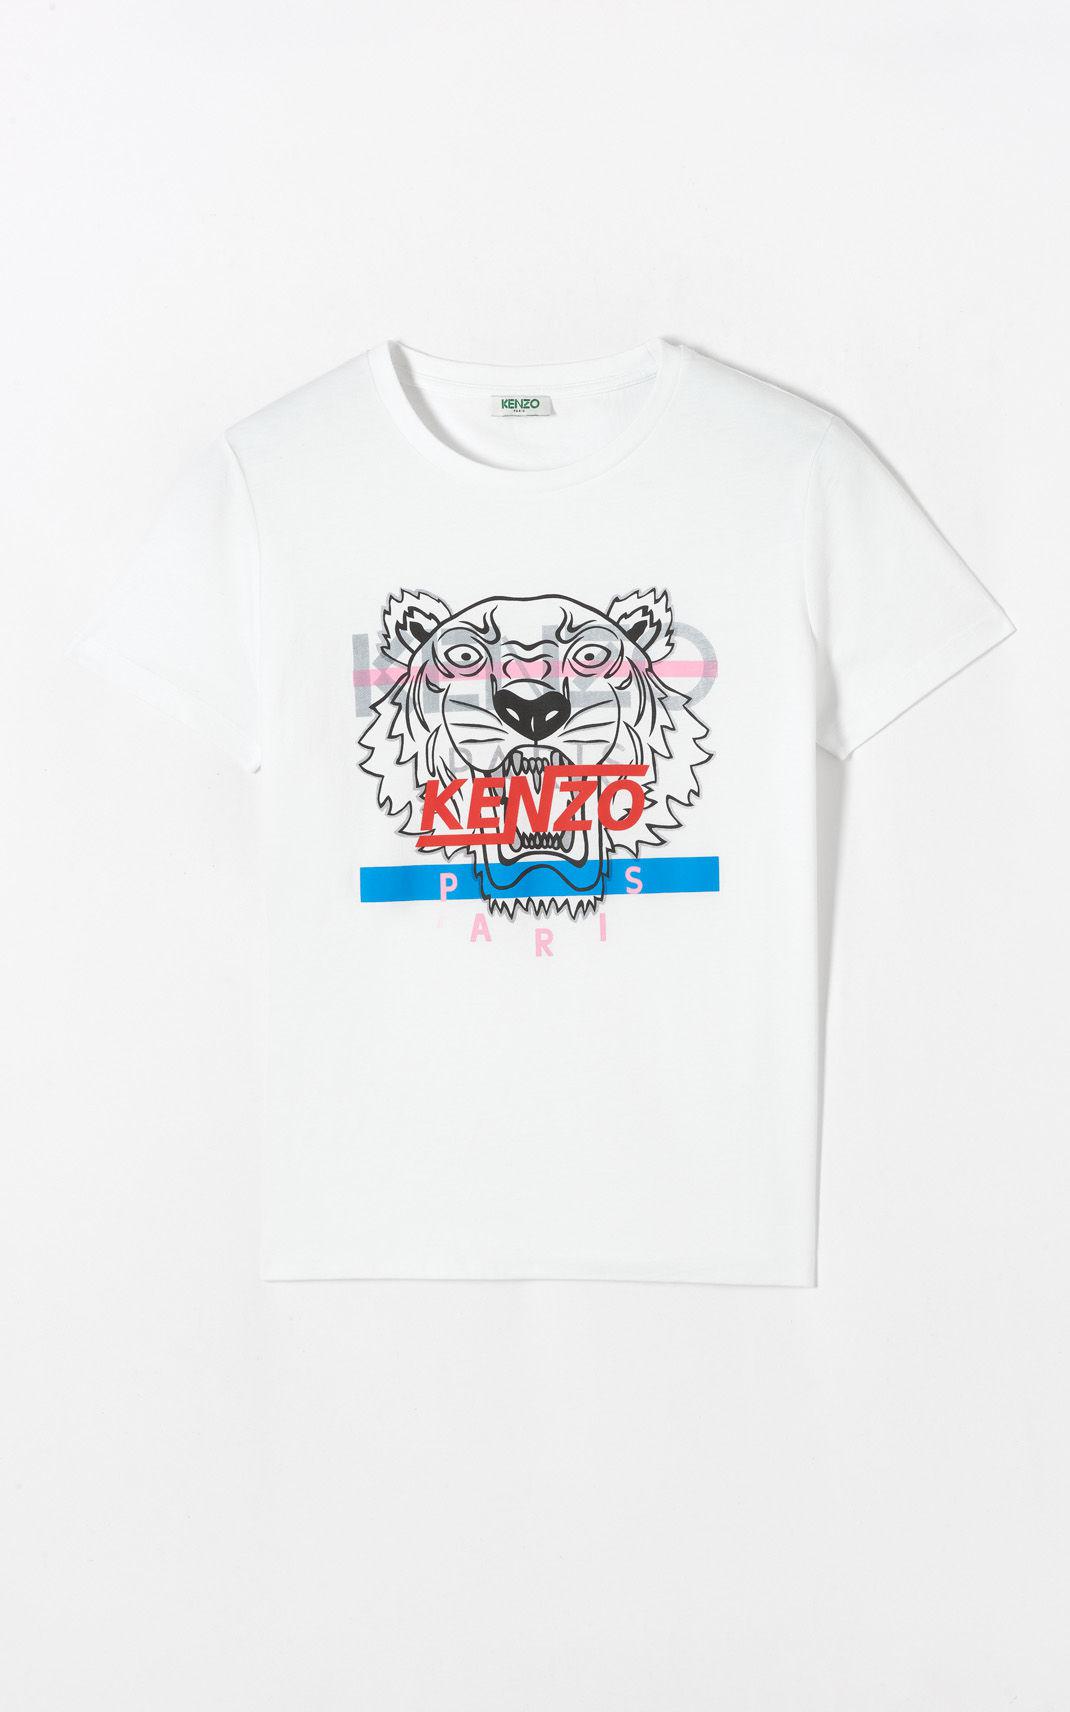 hyper kenzo t shirt